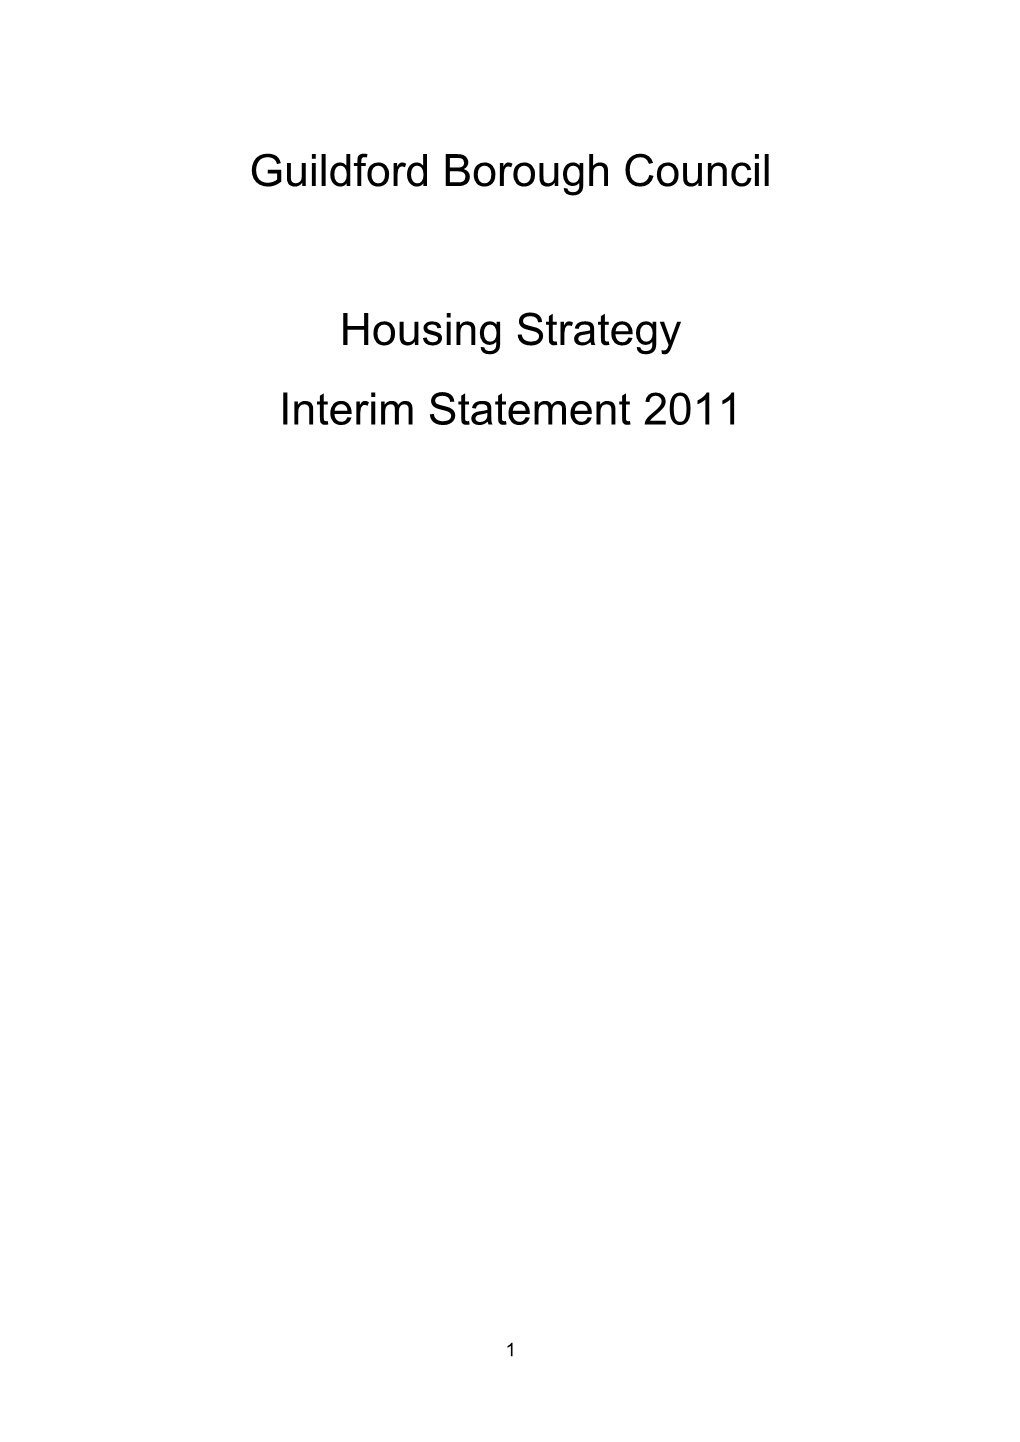 Guildford Borough Council Housing Strategy Interim Statement 2011